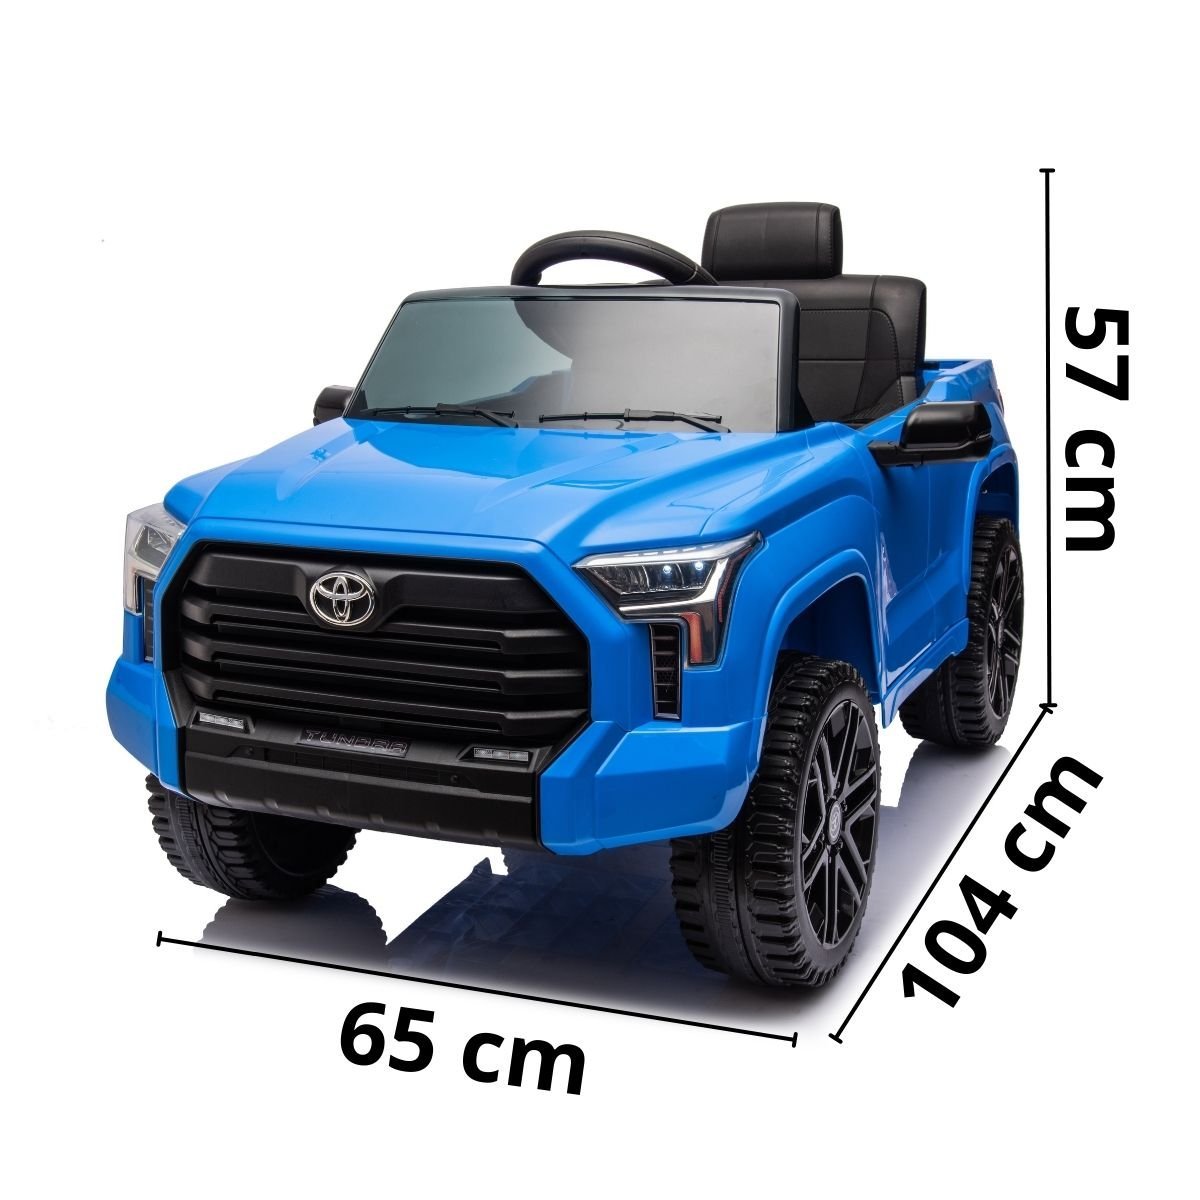 Mini Caminhonete Carro Elétrico Infantil Toyota Tundra Bateria 12V Azul Importway Bw-280az BW-280AZ  - 2